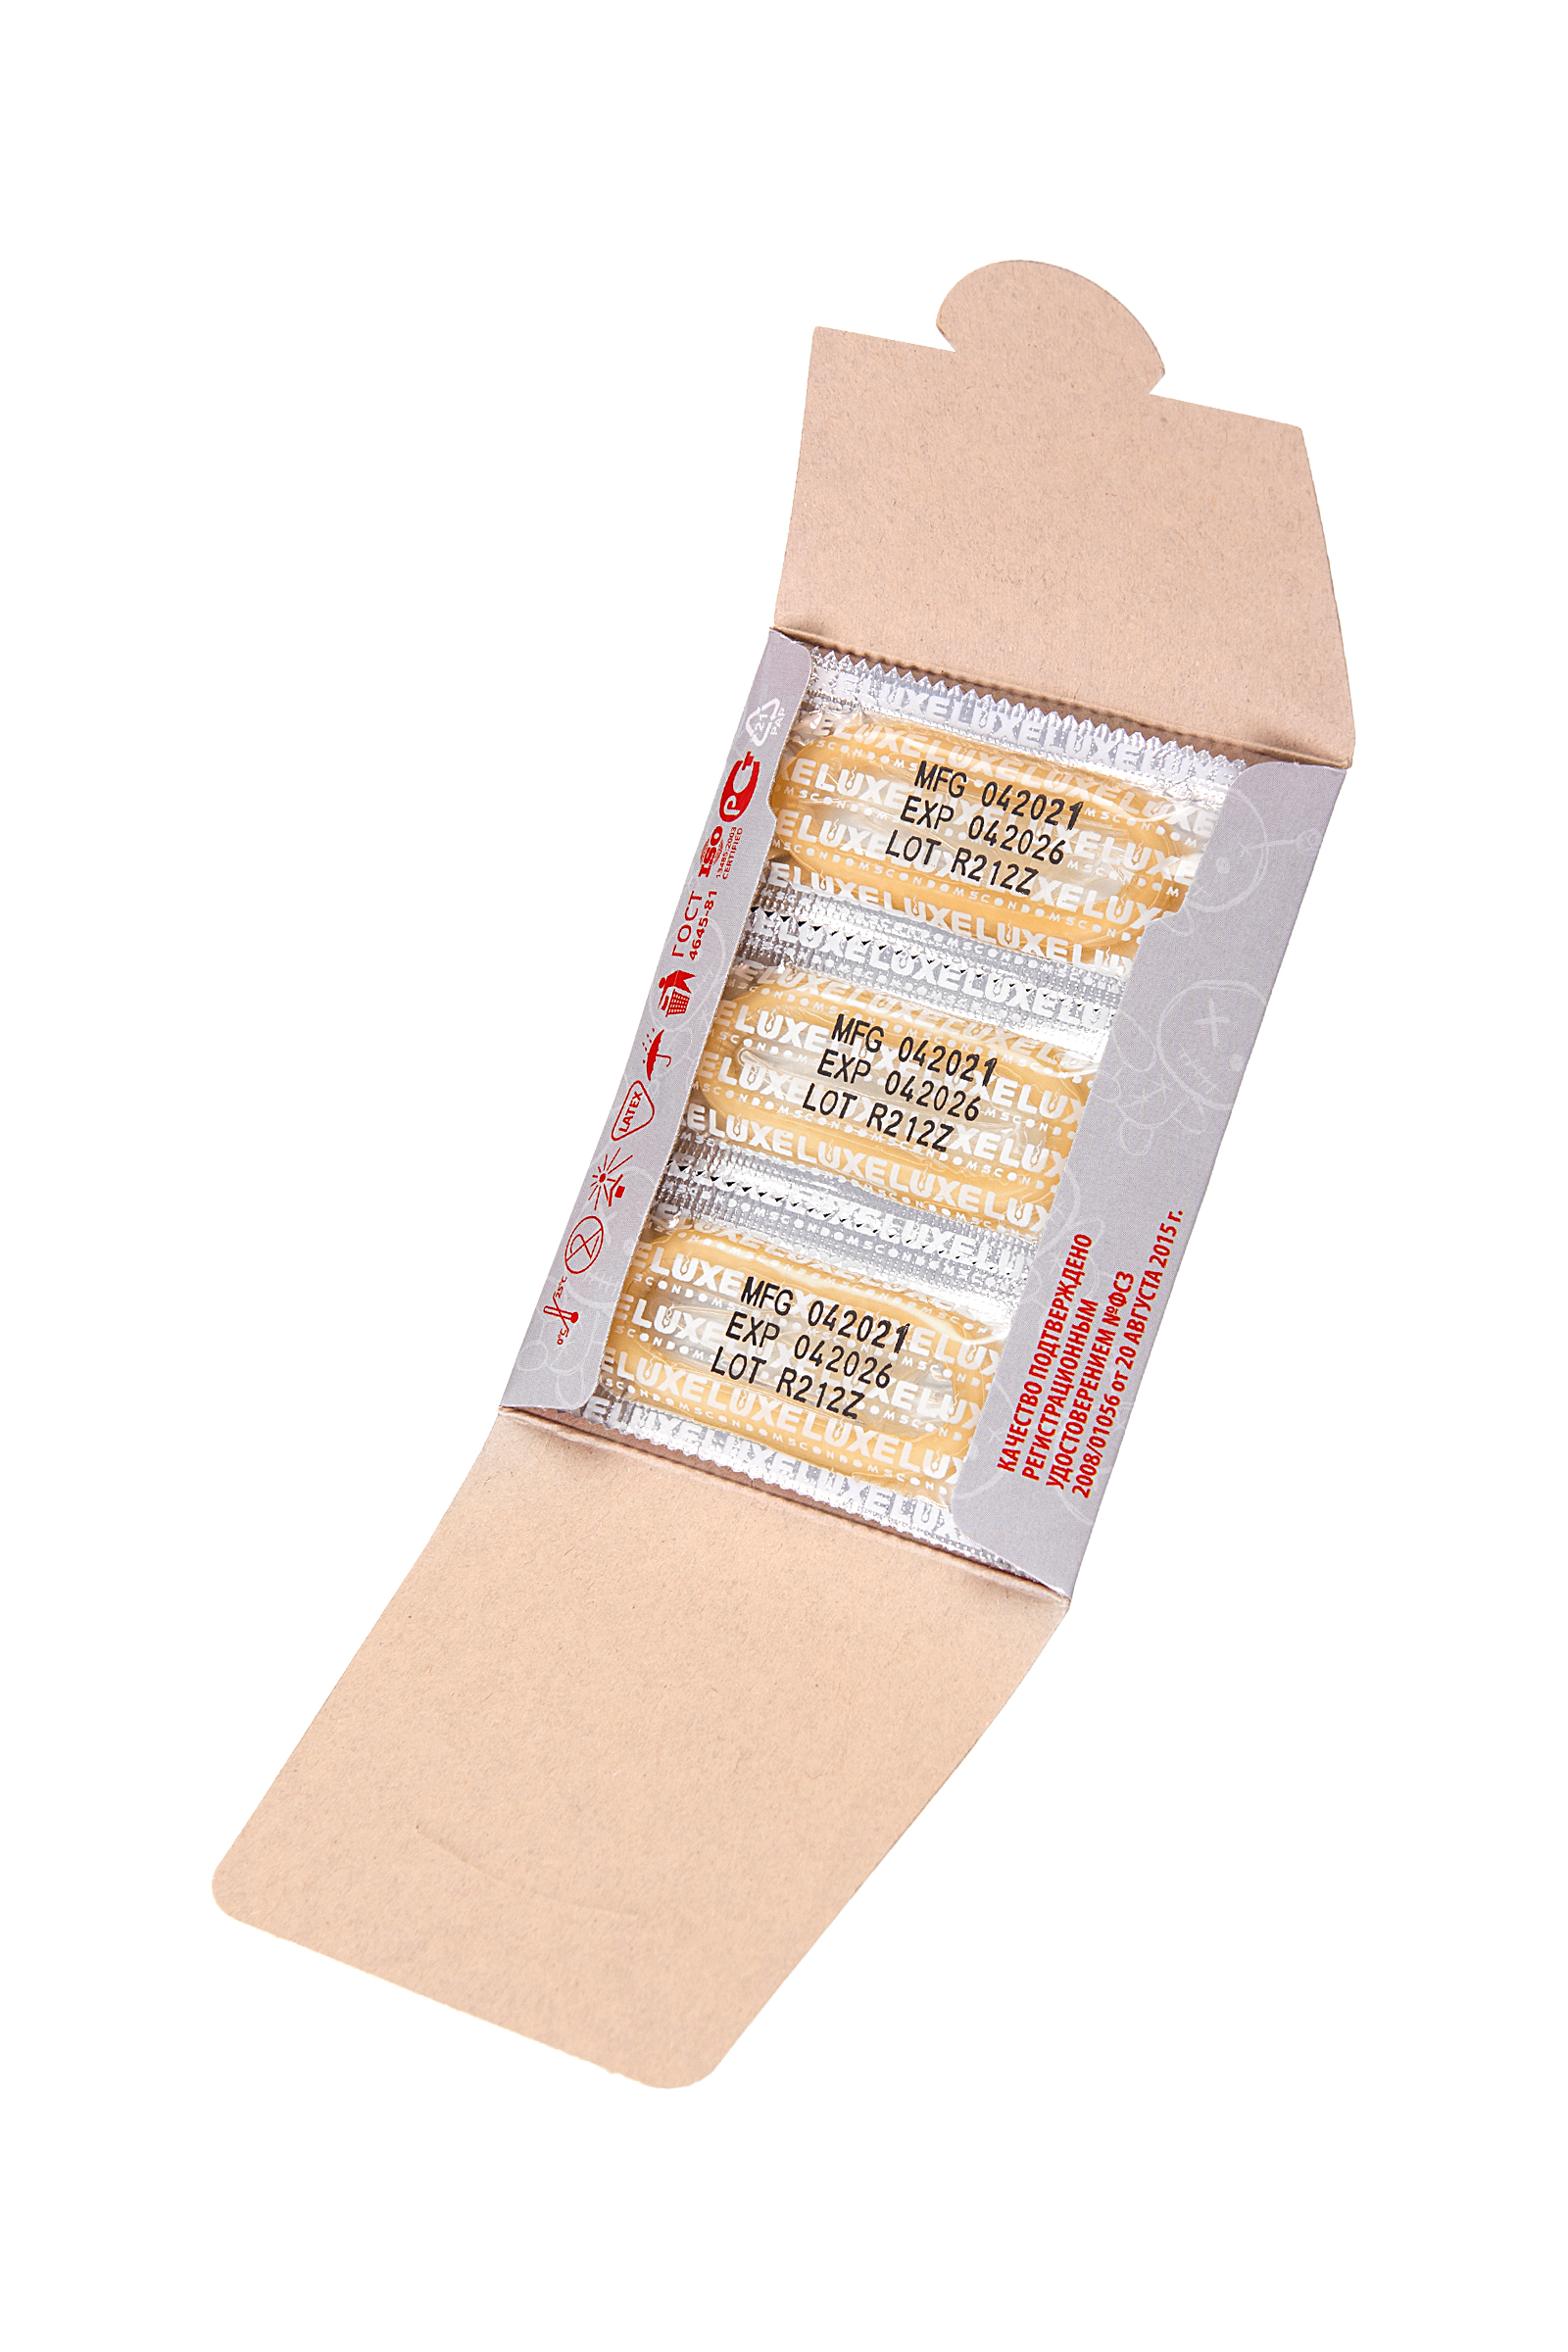 Презервативы Luxe, конверт «Воскрешаюший мертвеца», латекс, 18 см, 5,2 см, 3 шт. фото 1. Фото N4